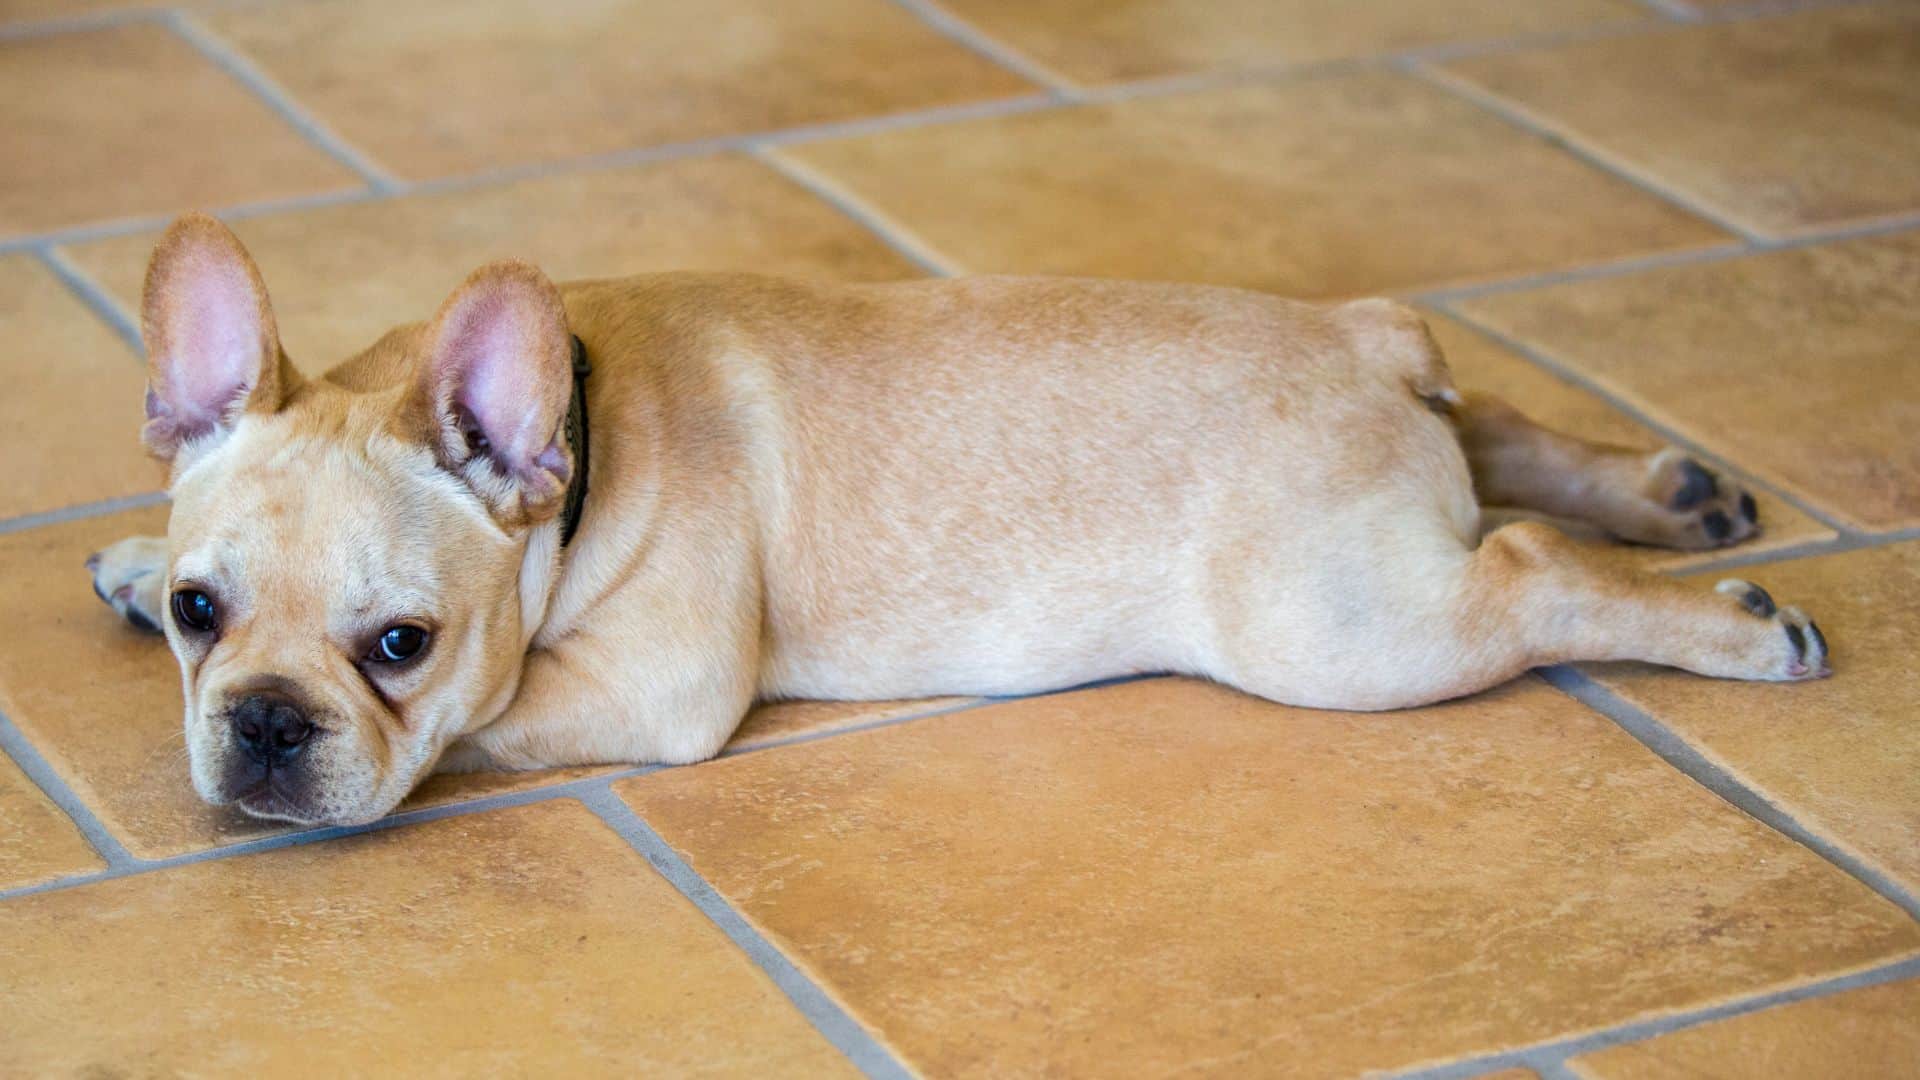 the dog is lying sad on the tiles